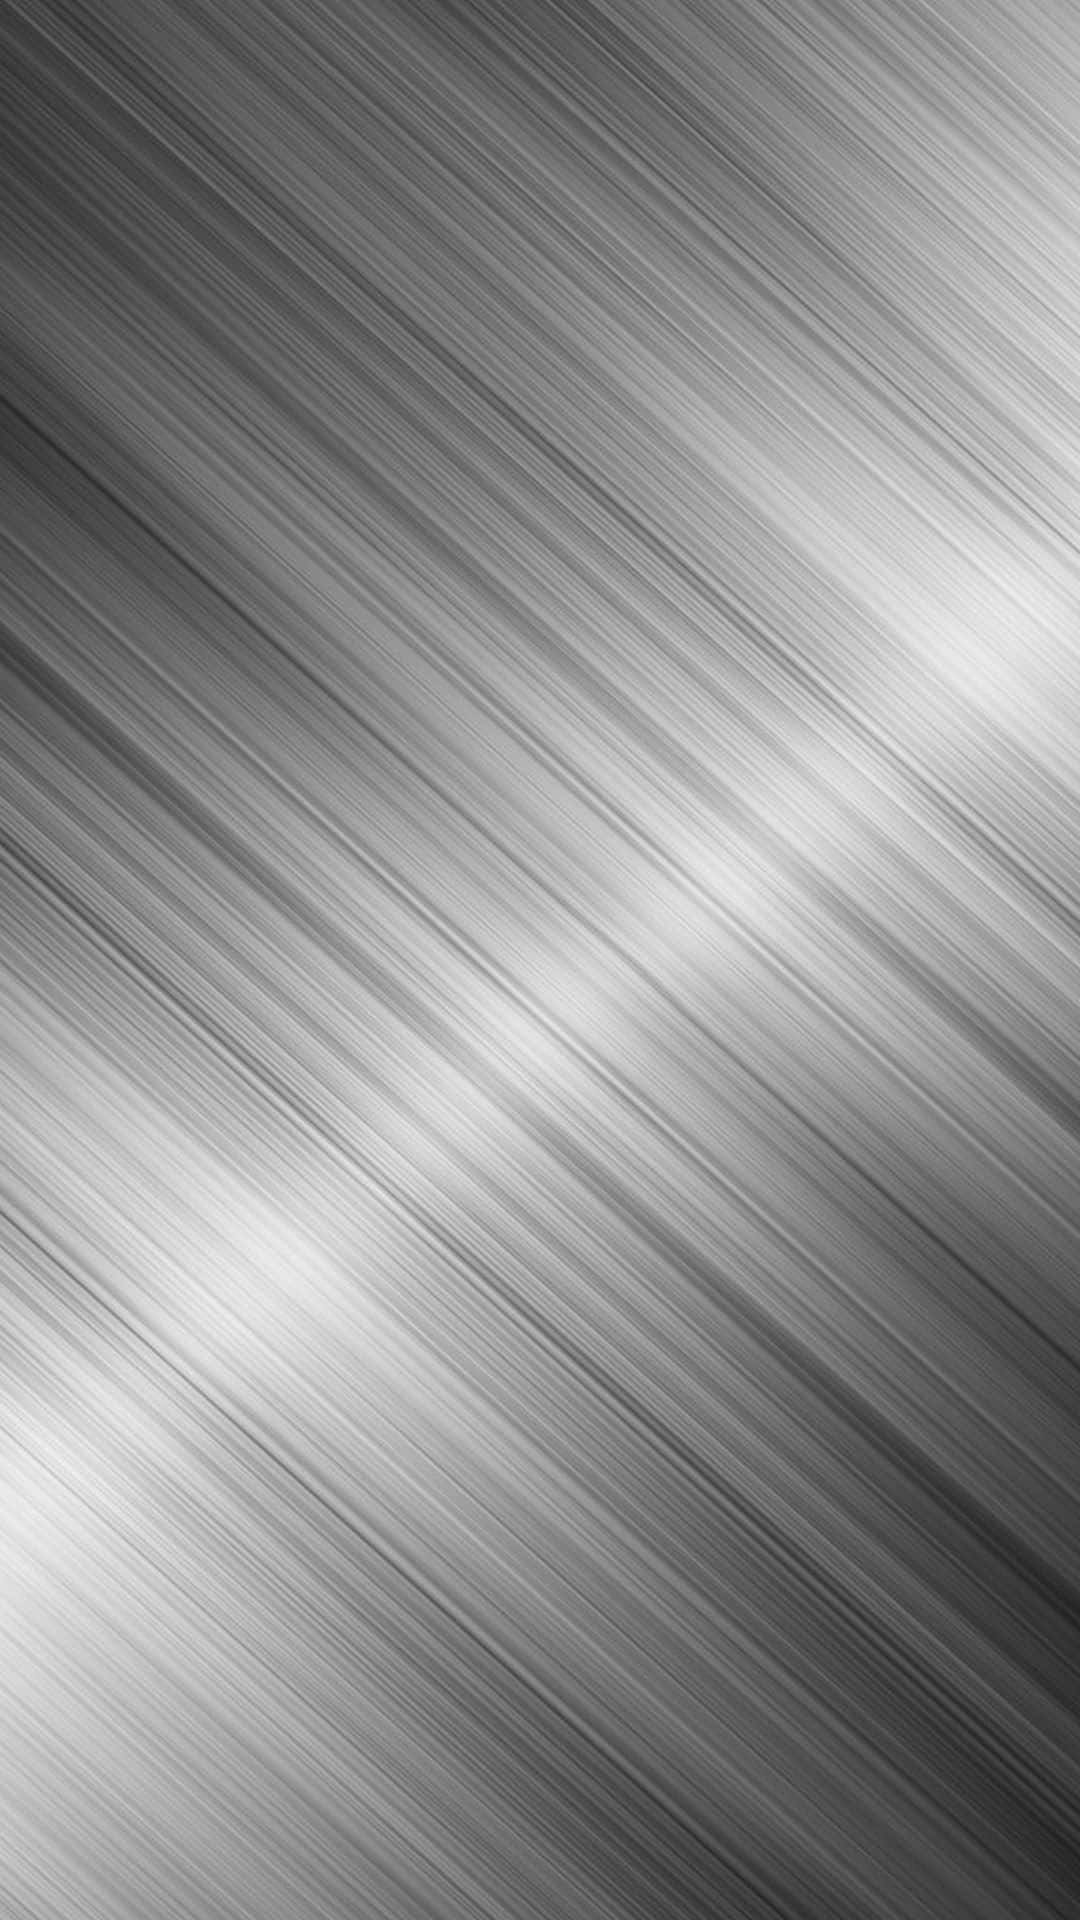 En glansfuld sort metallic overflade reflekterer i et lyst oplyst rum Wallpaper